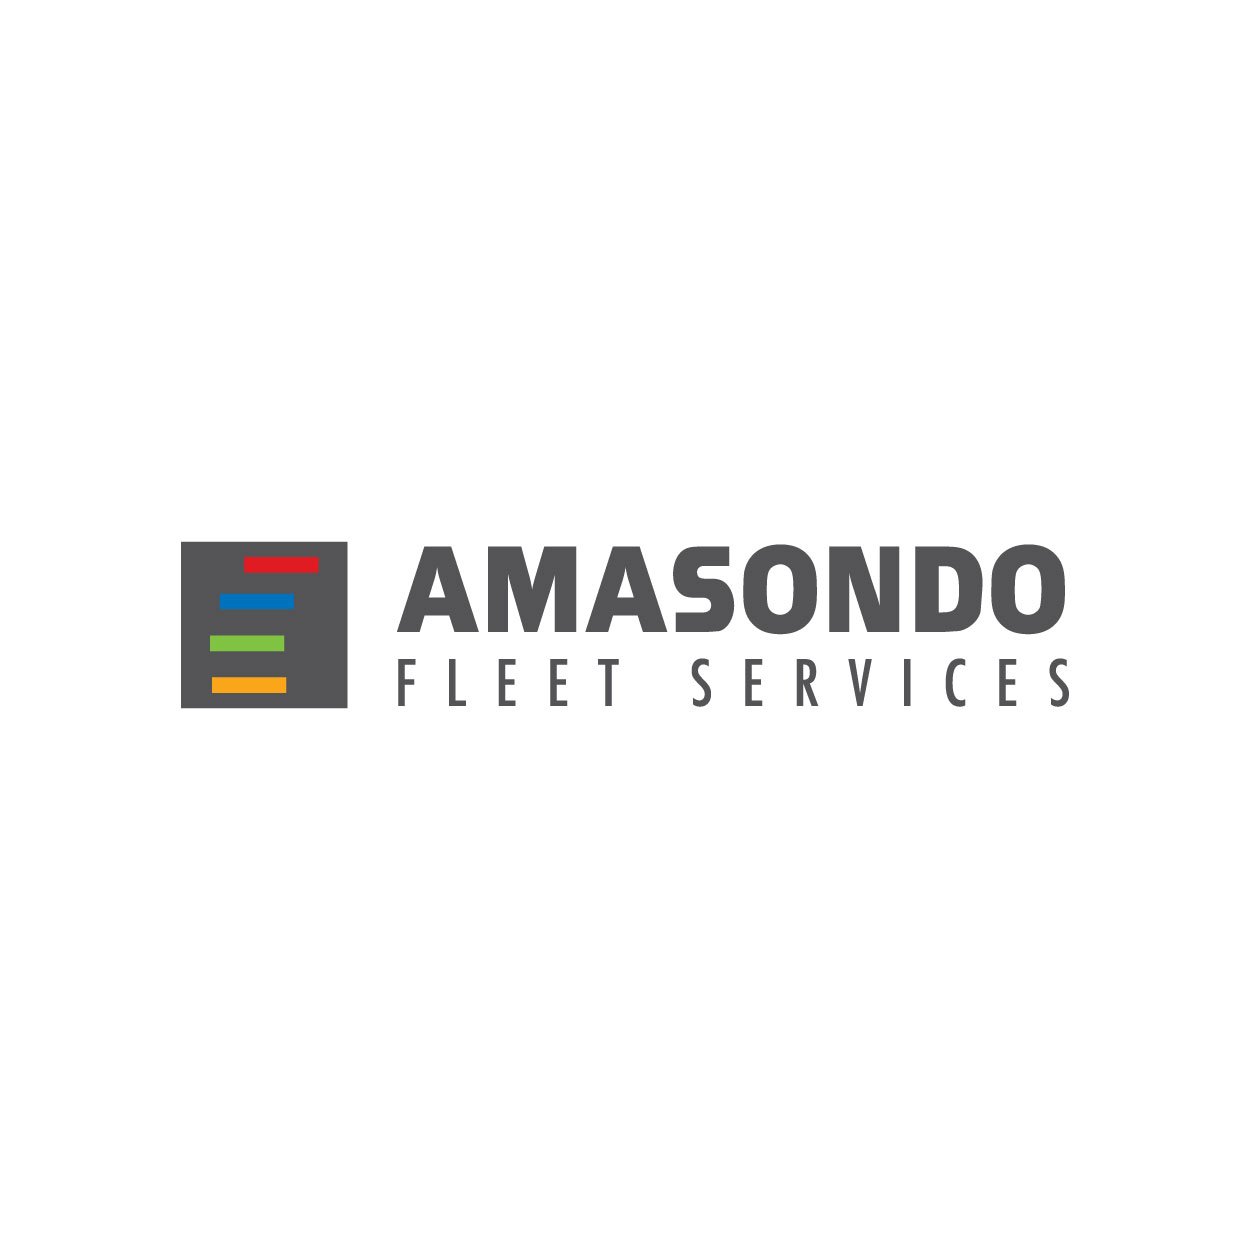 Amasondo Fleet Services